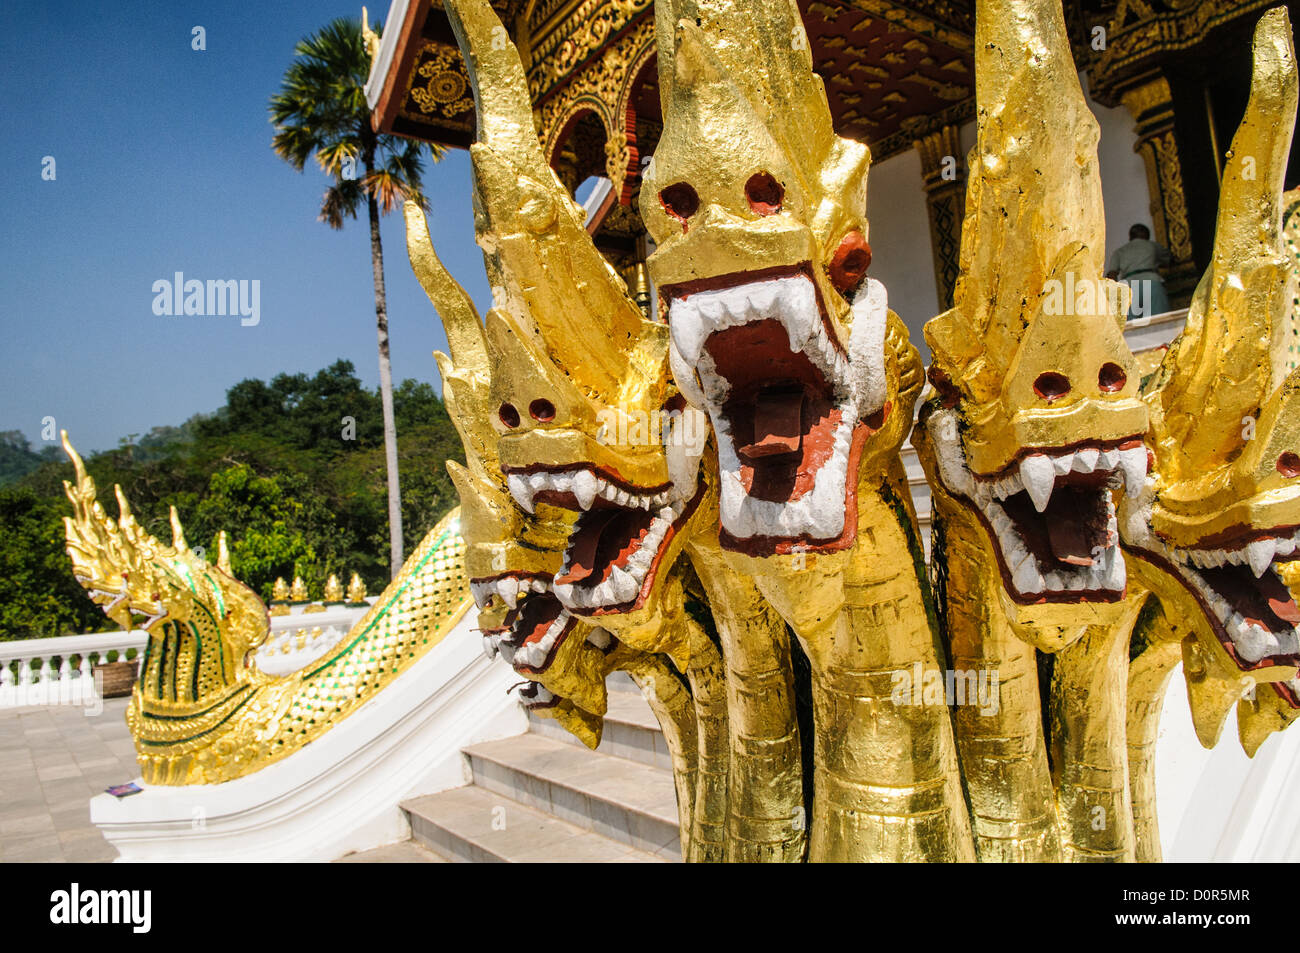 LUANG PRABANG, Laos - Golden naga (King Cobras) decorate teh stairs of Haw Pha Bang (or Palace Chapel) at the Royal Palace Museum in Luang Prabang, Laos. The chapel sits at the northeastern corner of the grounds. Construction started in 1963. Stock Photo